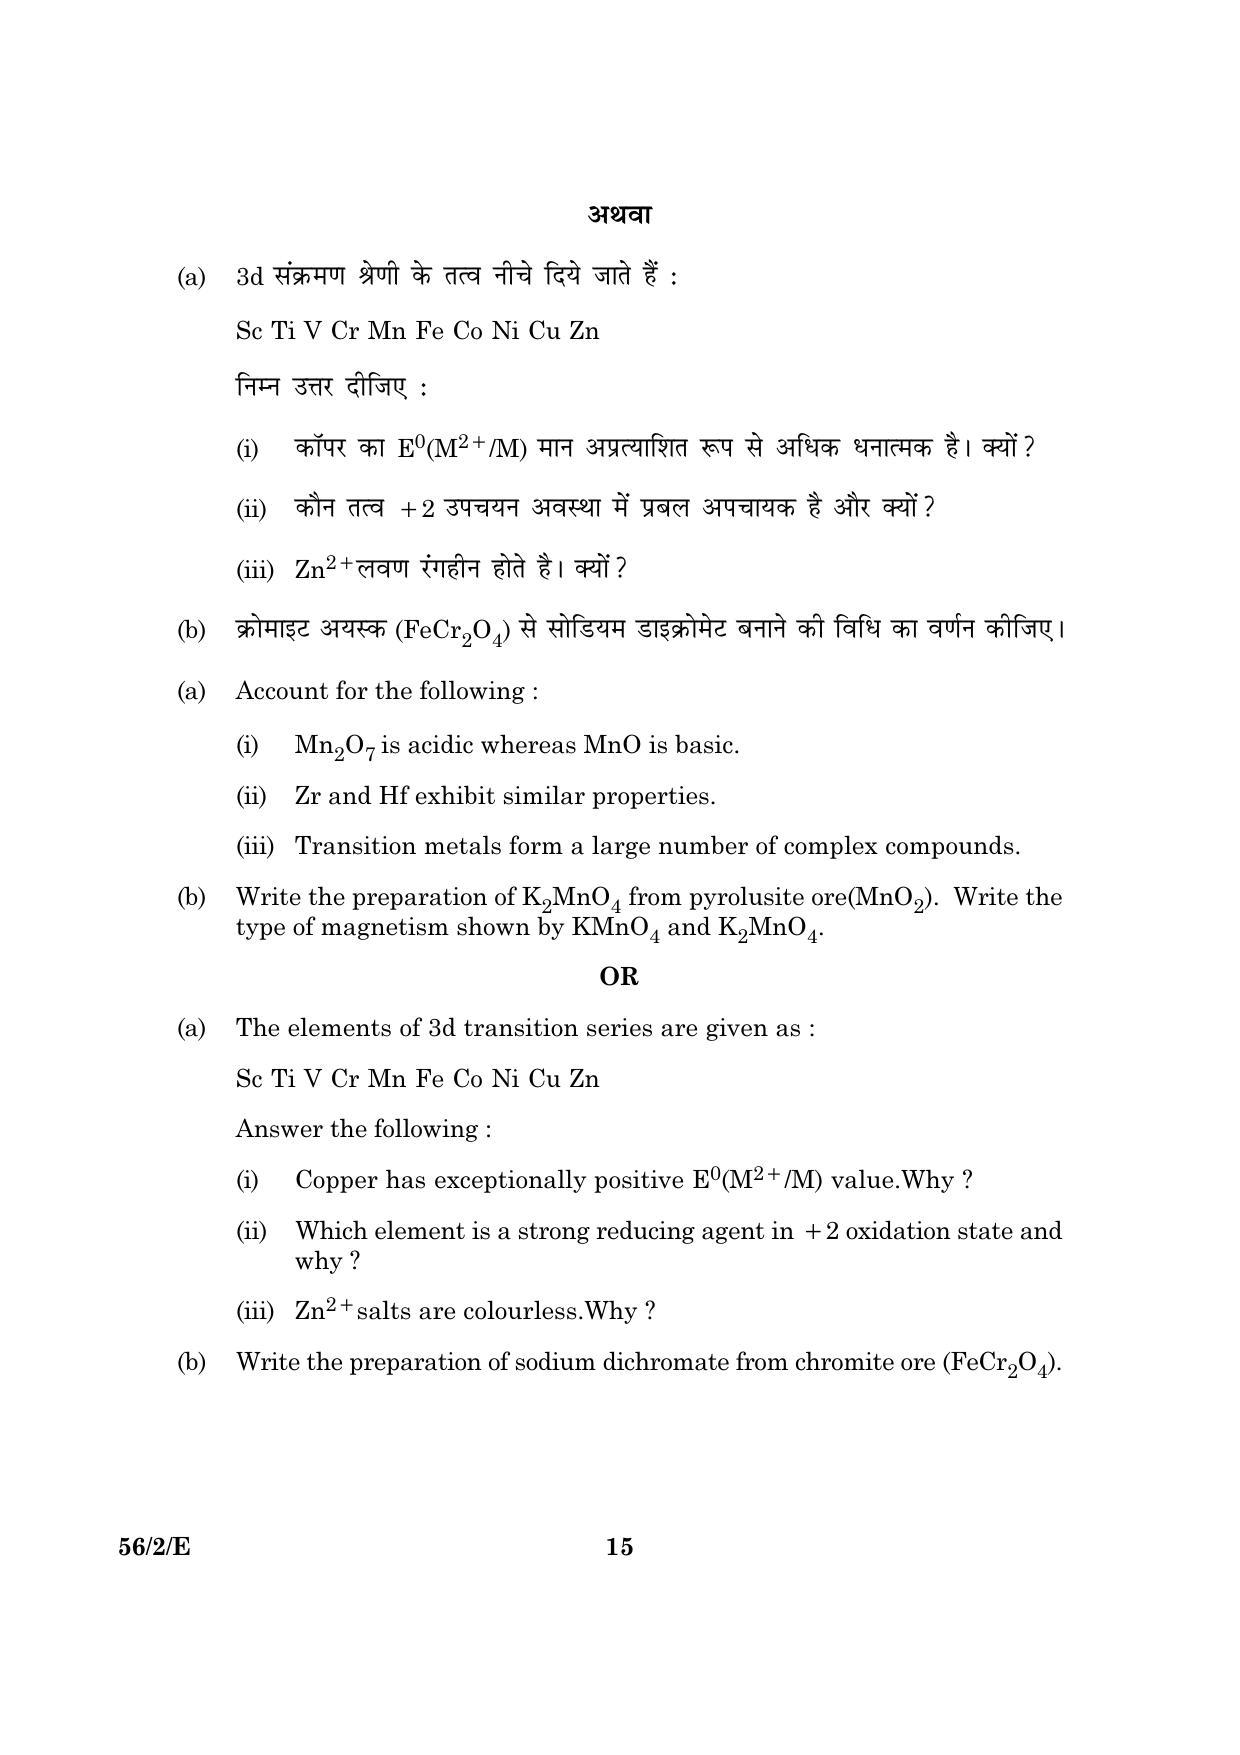 CBSE Class 12 056 Set 2 E Chemistry 2016 Question Paper - Page 15